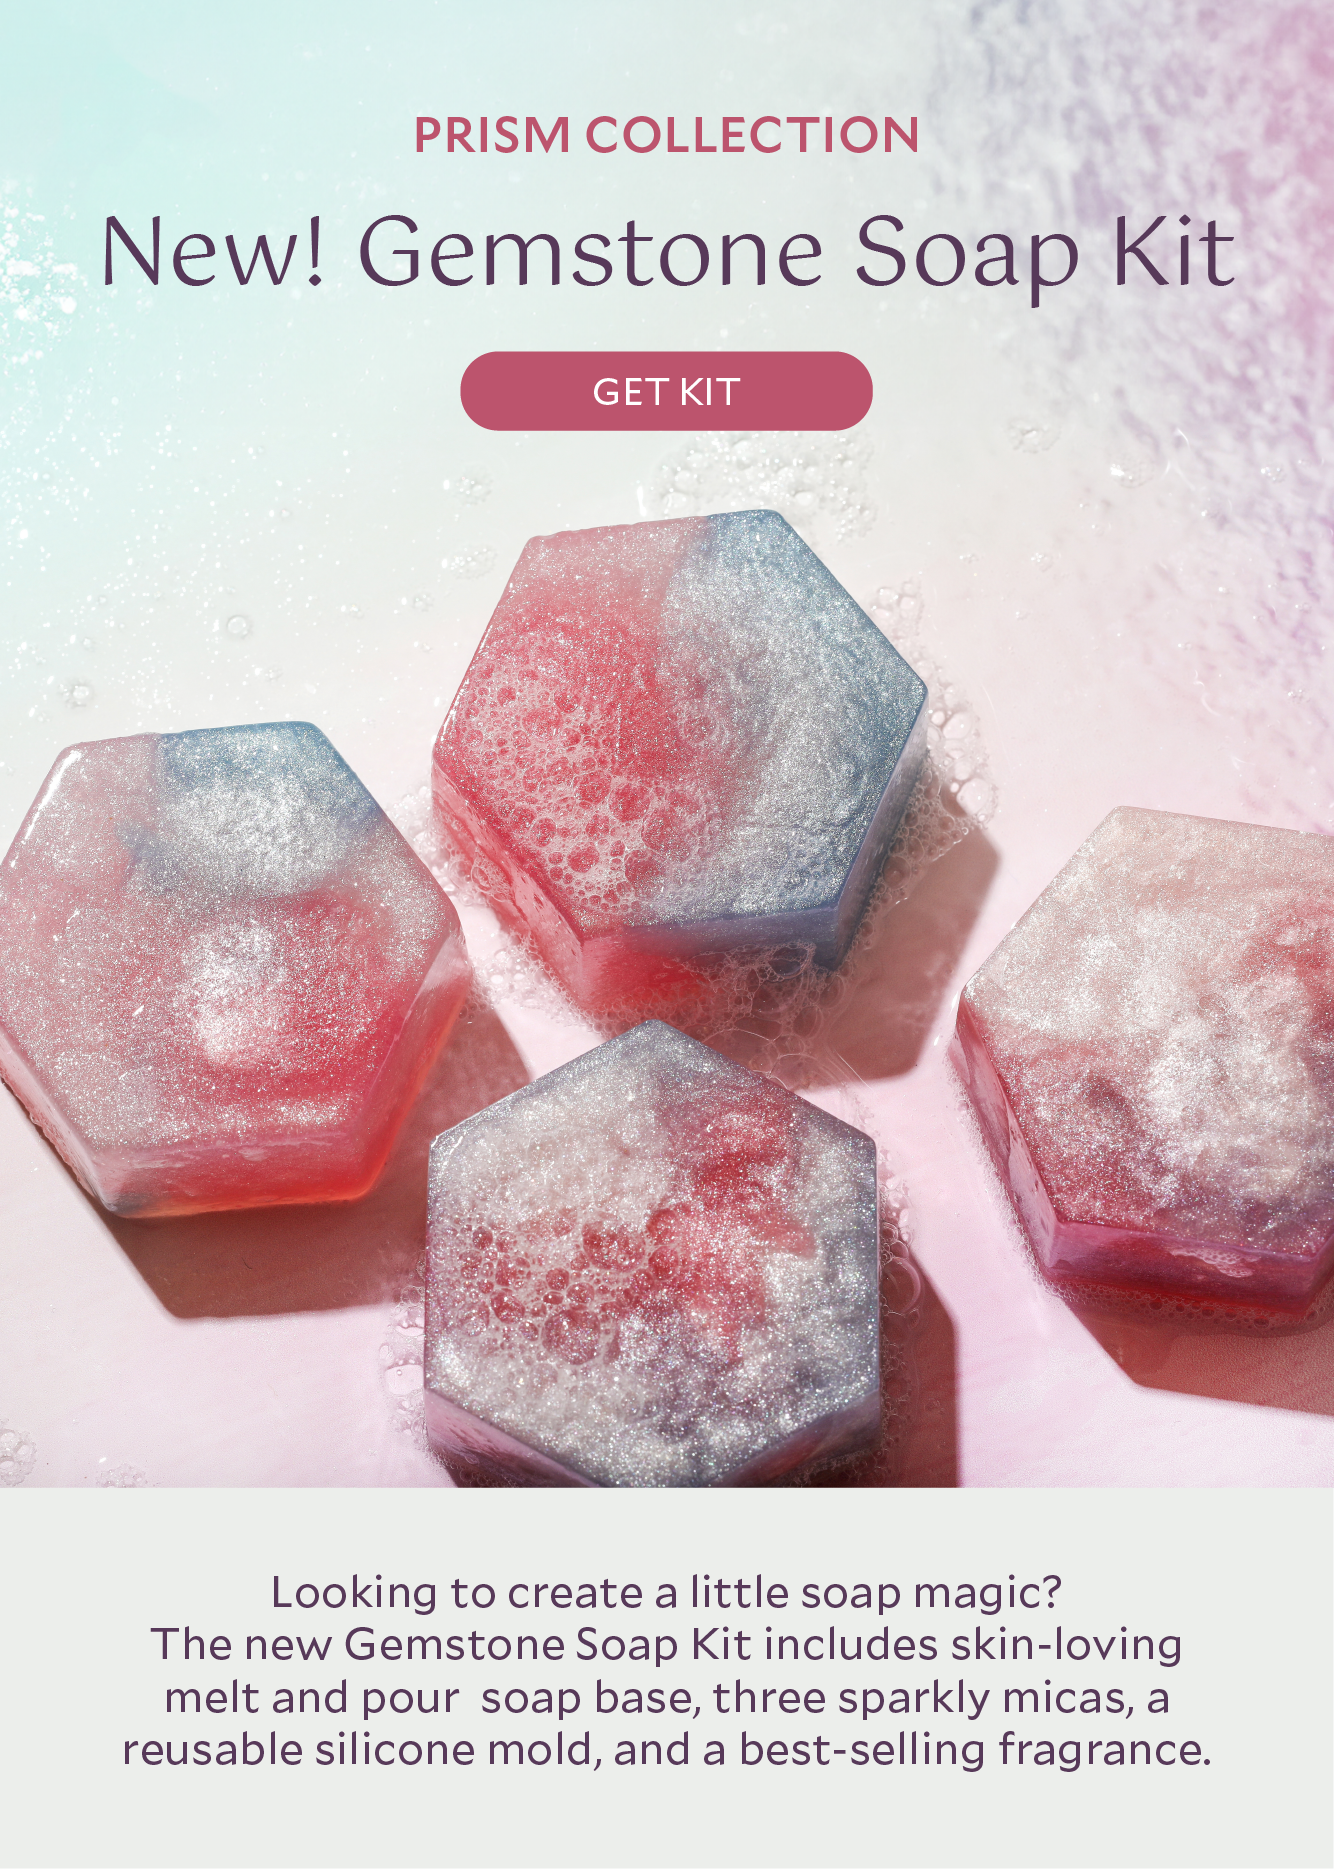 NEW! Gemstone Soap Kit